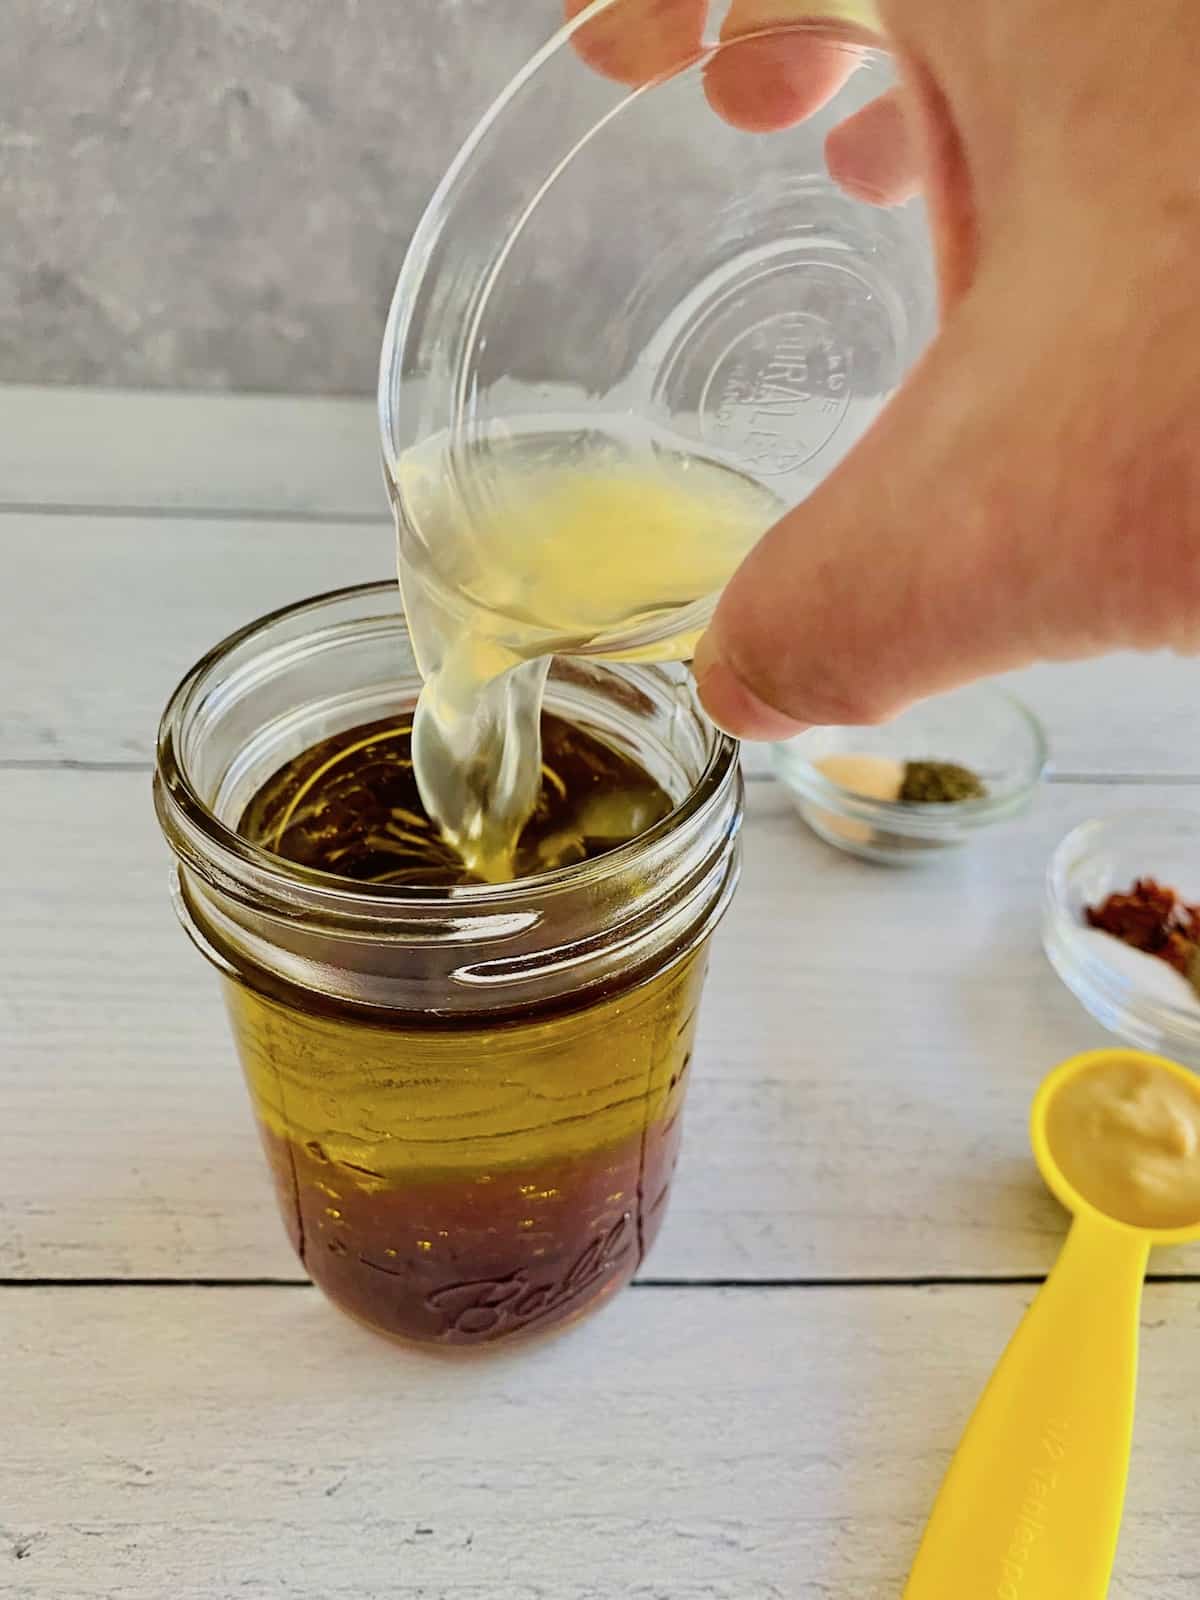 Adding lemon juice to oil and vinegar